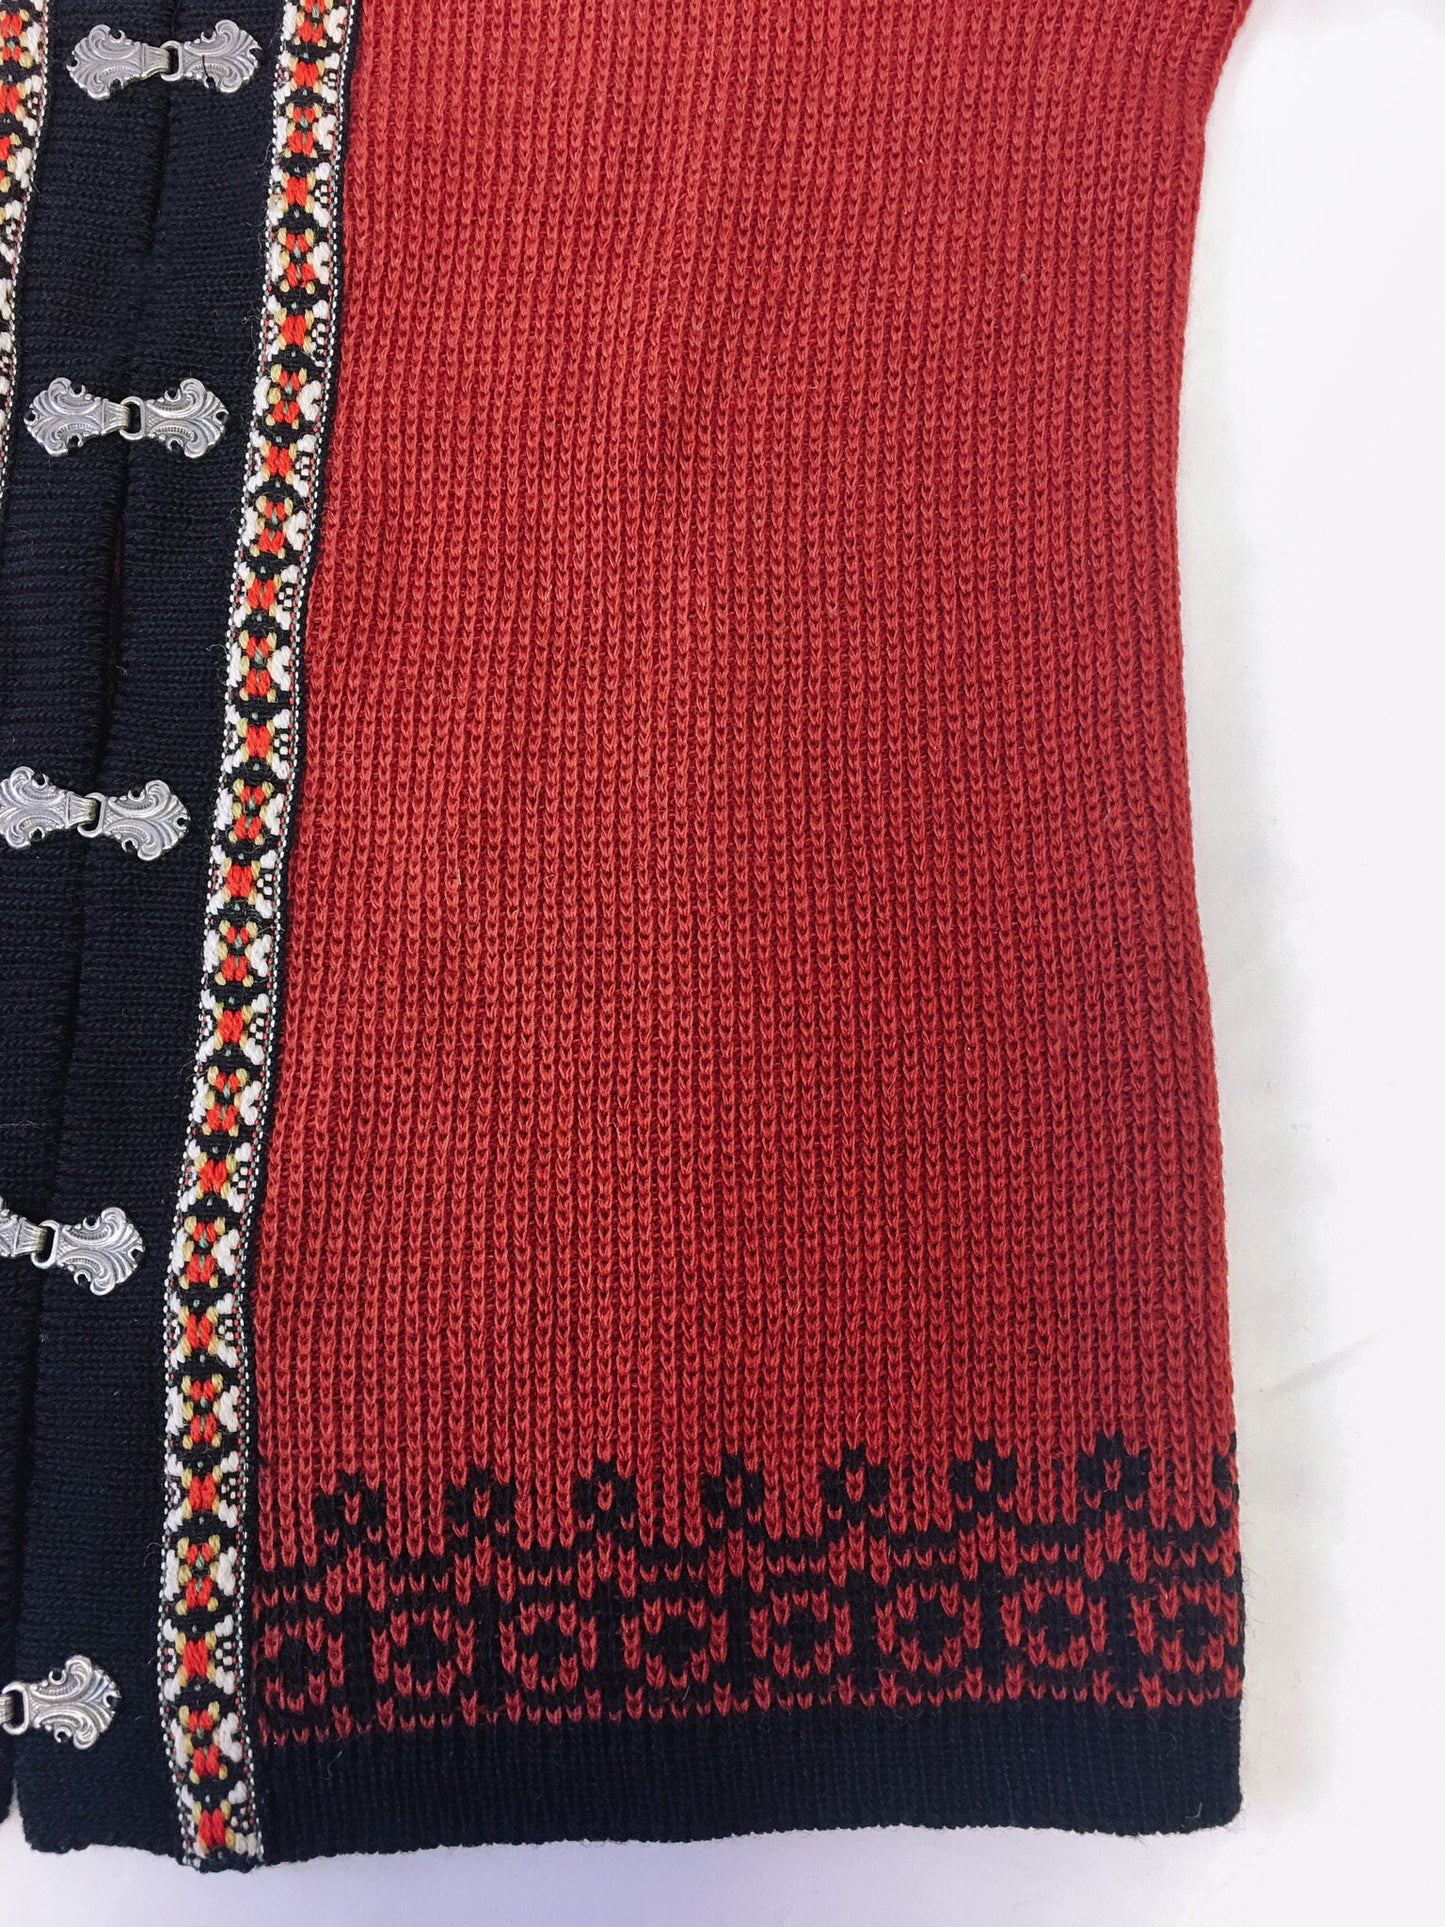 Vintage 90s Nordstrikk Red & Black Embroidered Wool Cardigan With Metal Clasp Enclosure, Vintage Nordic Cardigan Sweater, Made in Norway